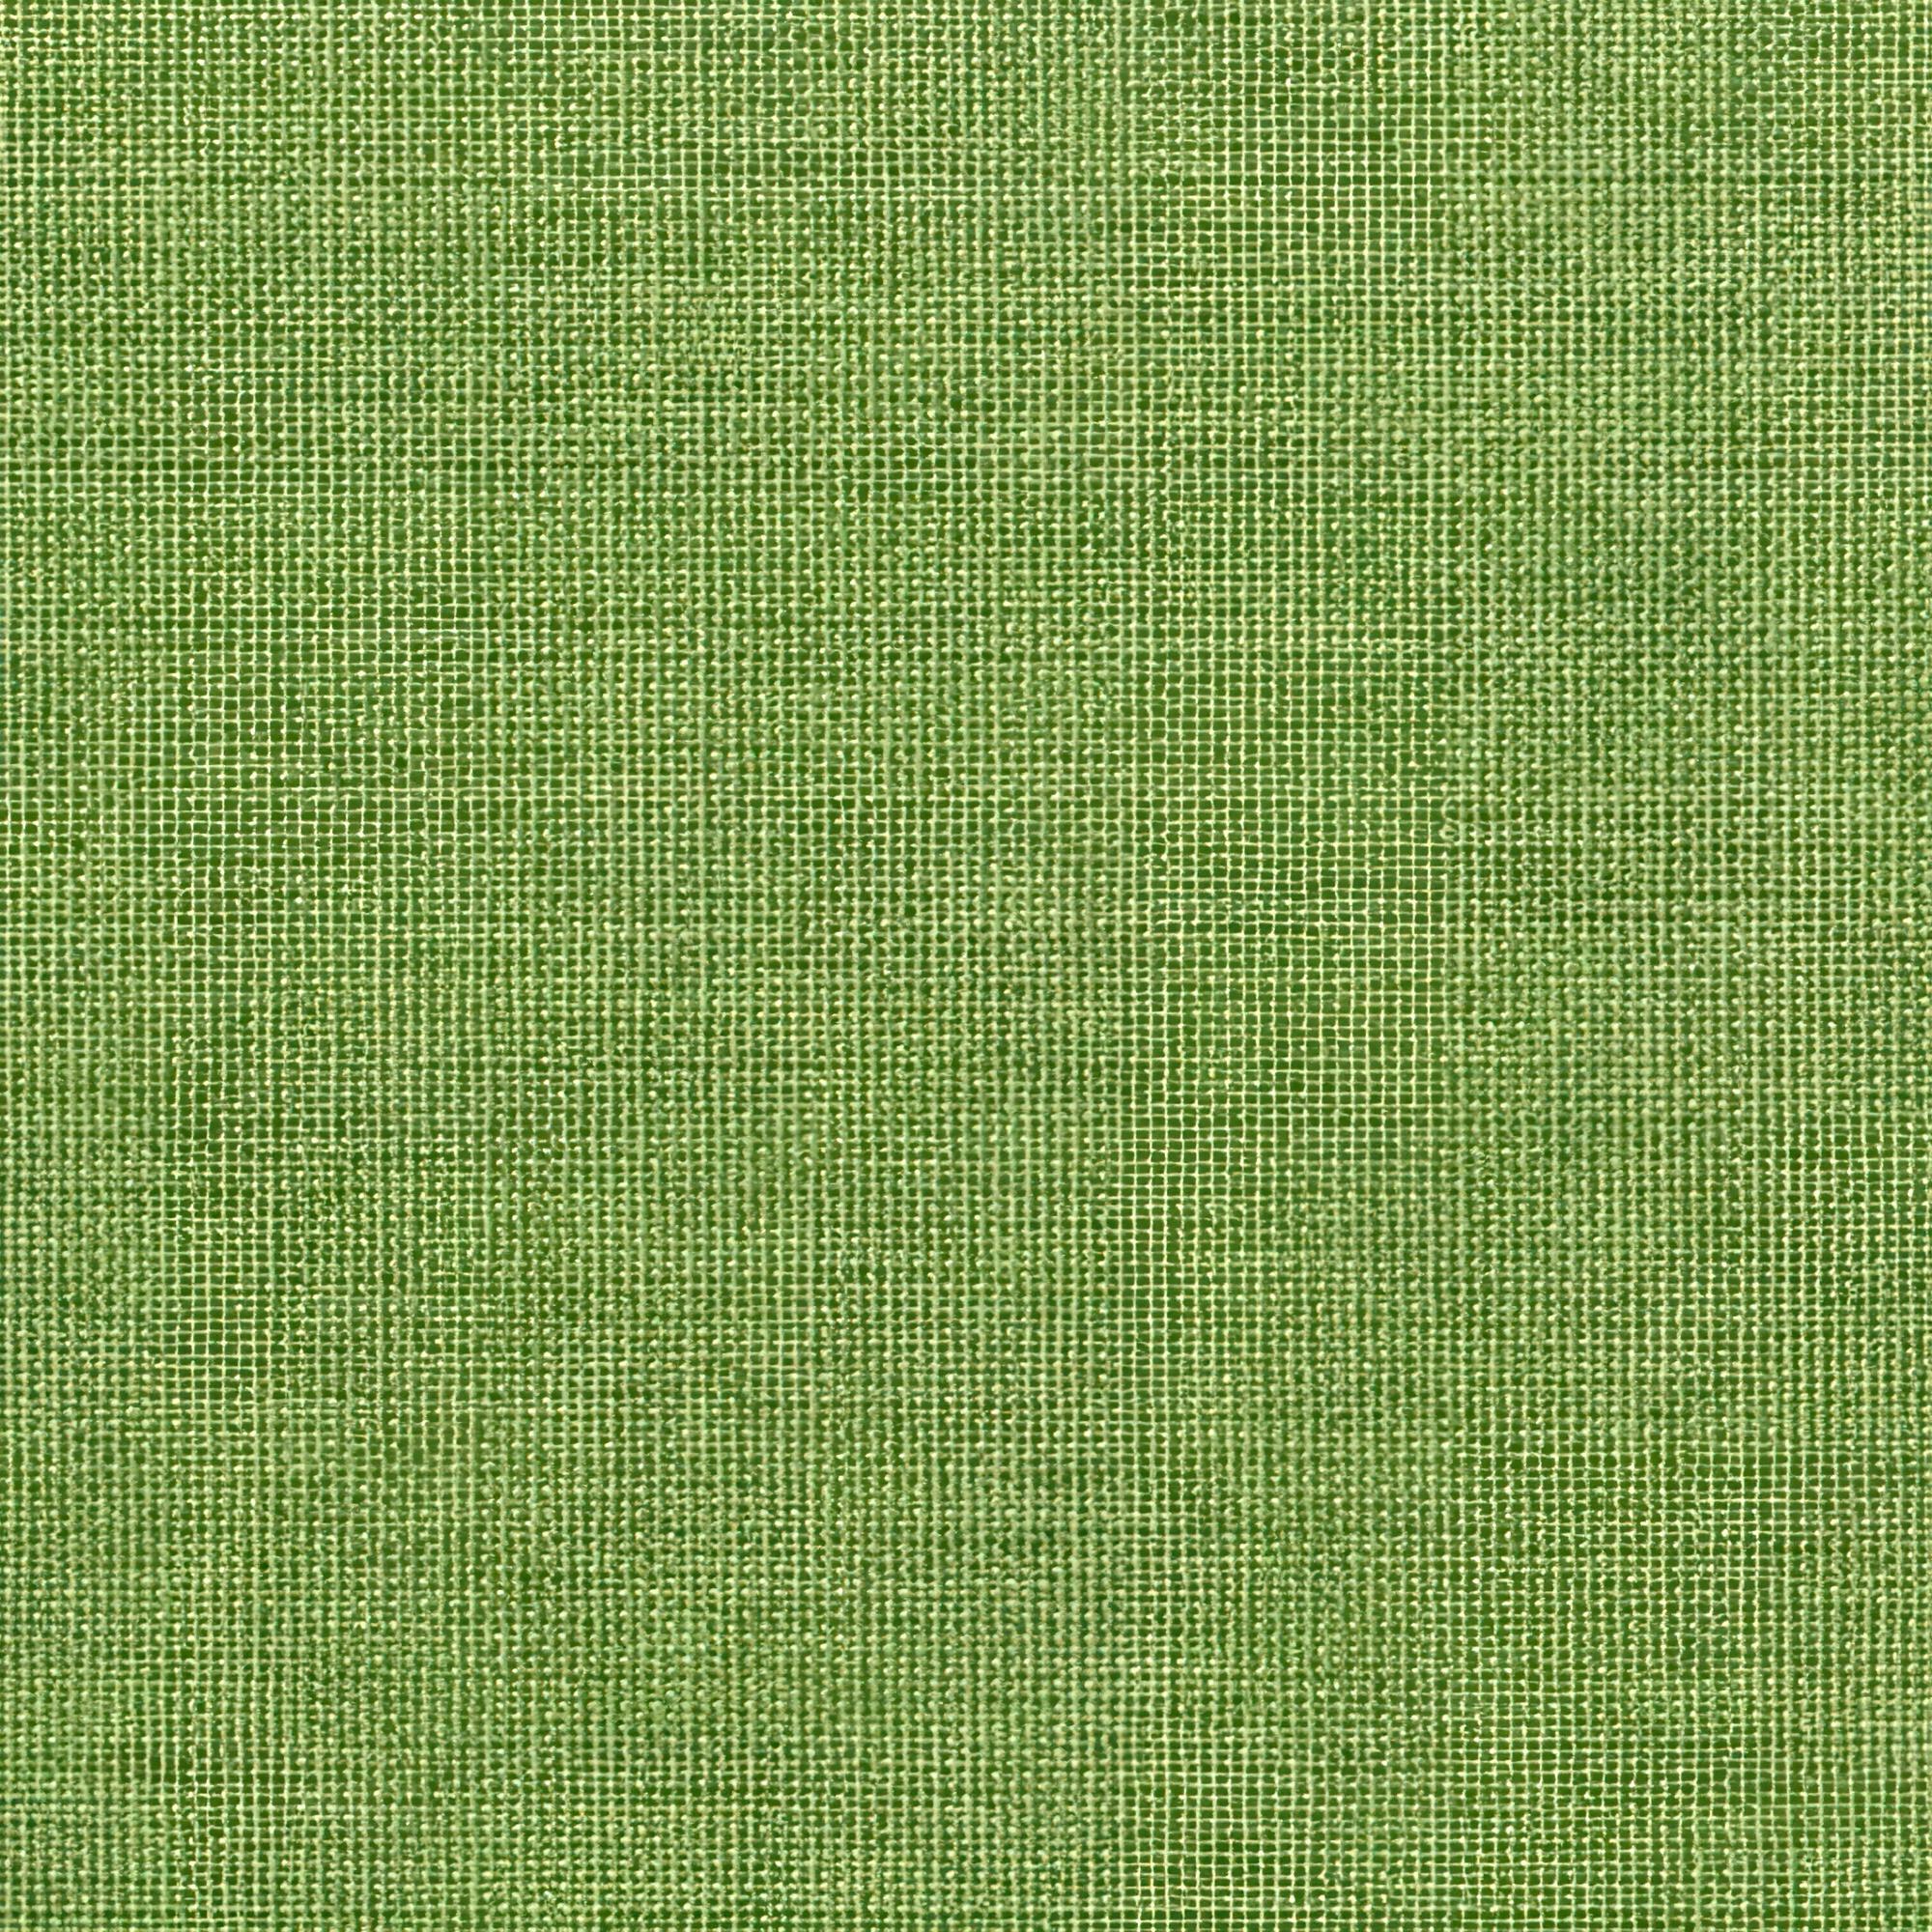 Tela al corte tapicería jacquard yatch soft verde ancho 140 cm